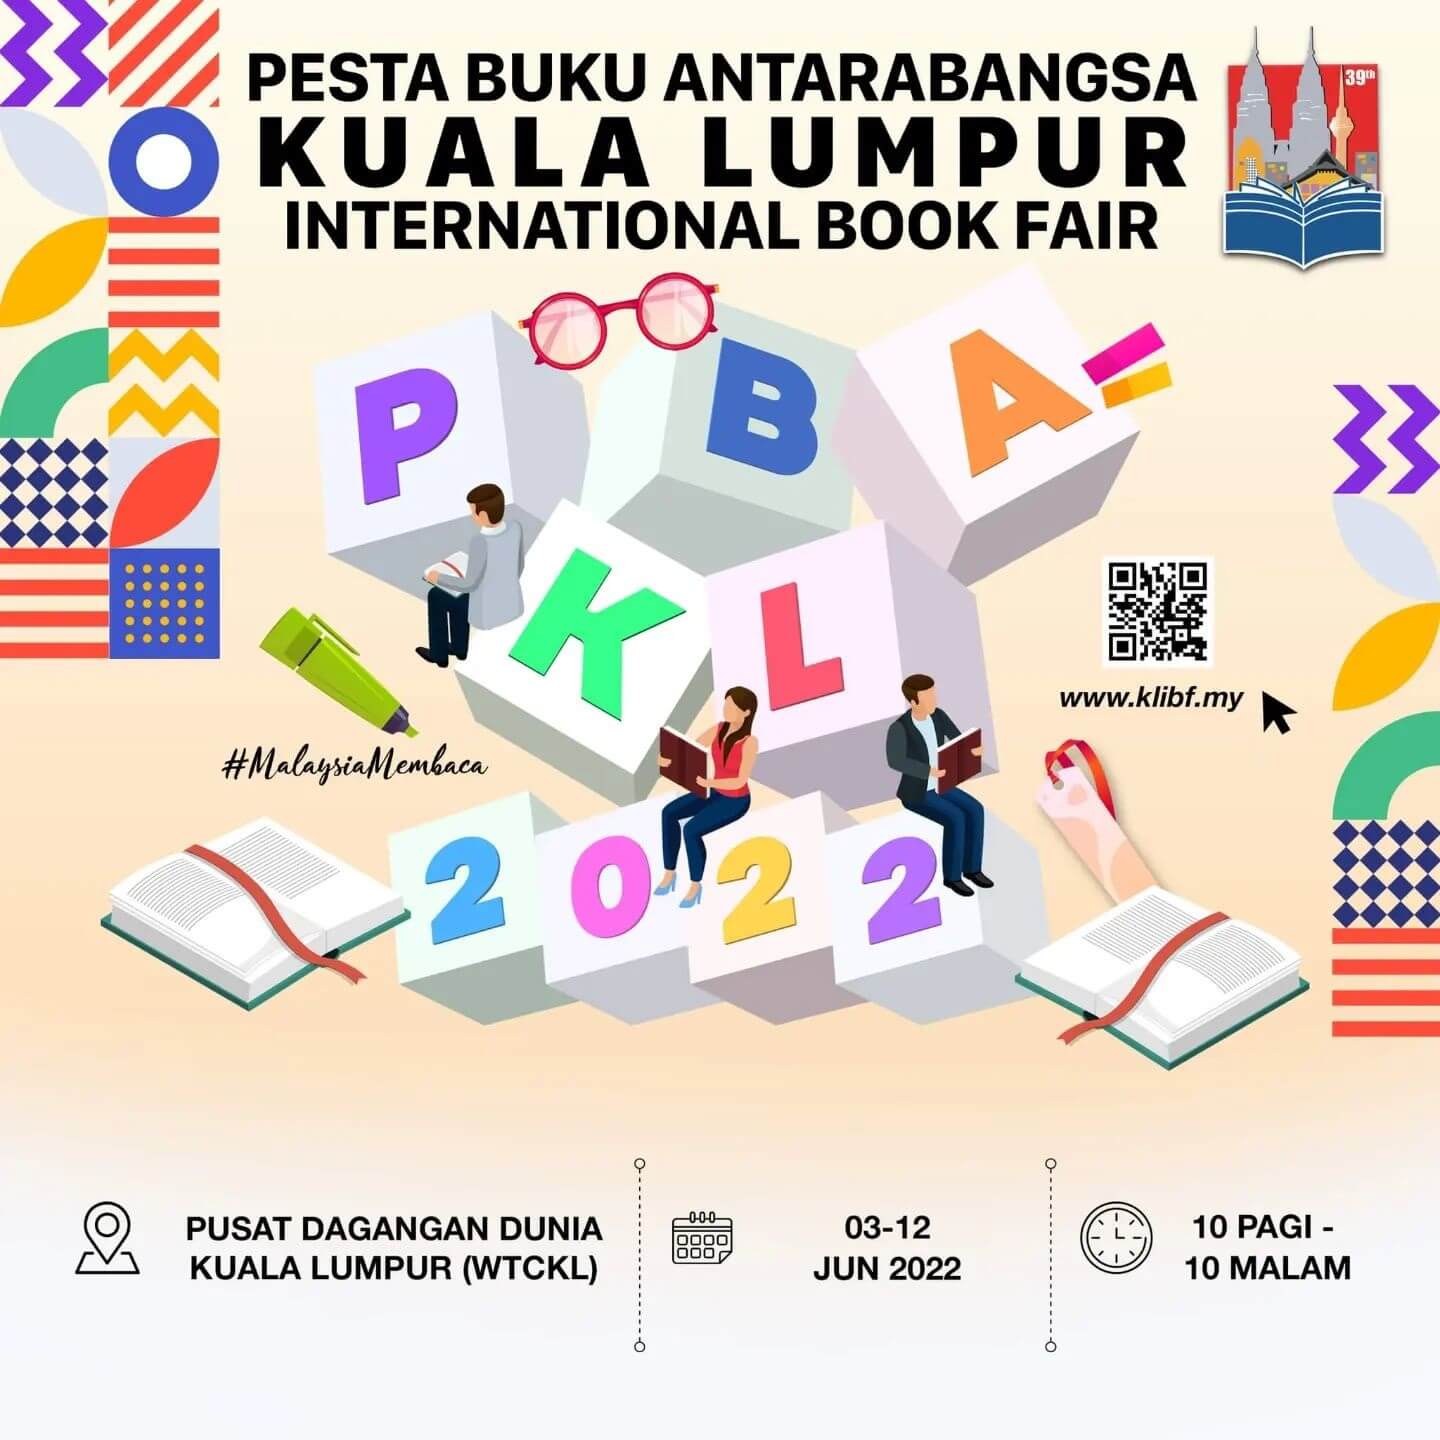 Pesta Buku Antarabangsa Kuala Lumpur (PBAKL)